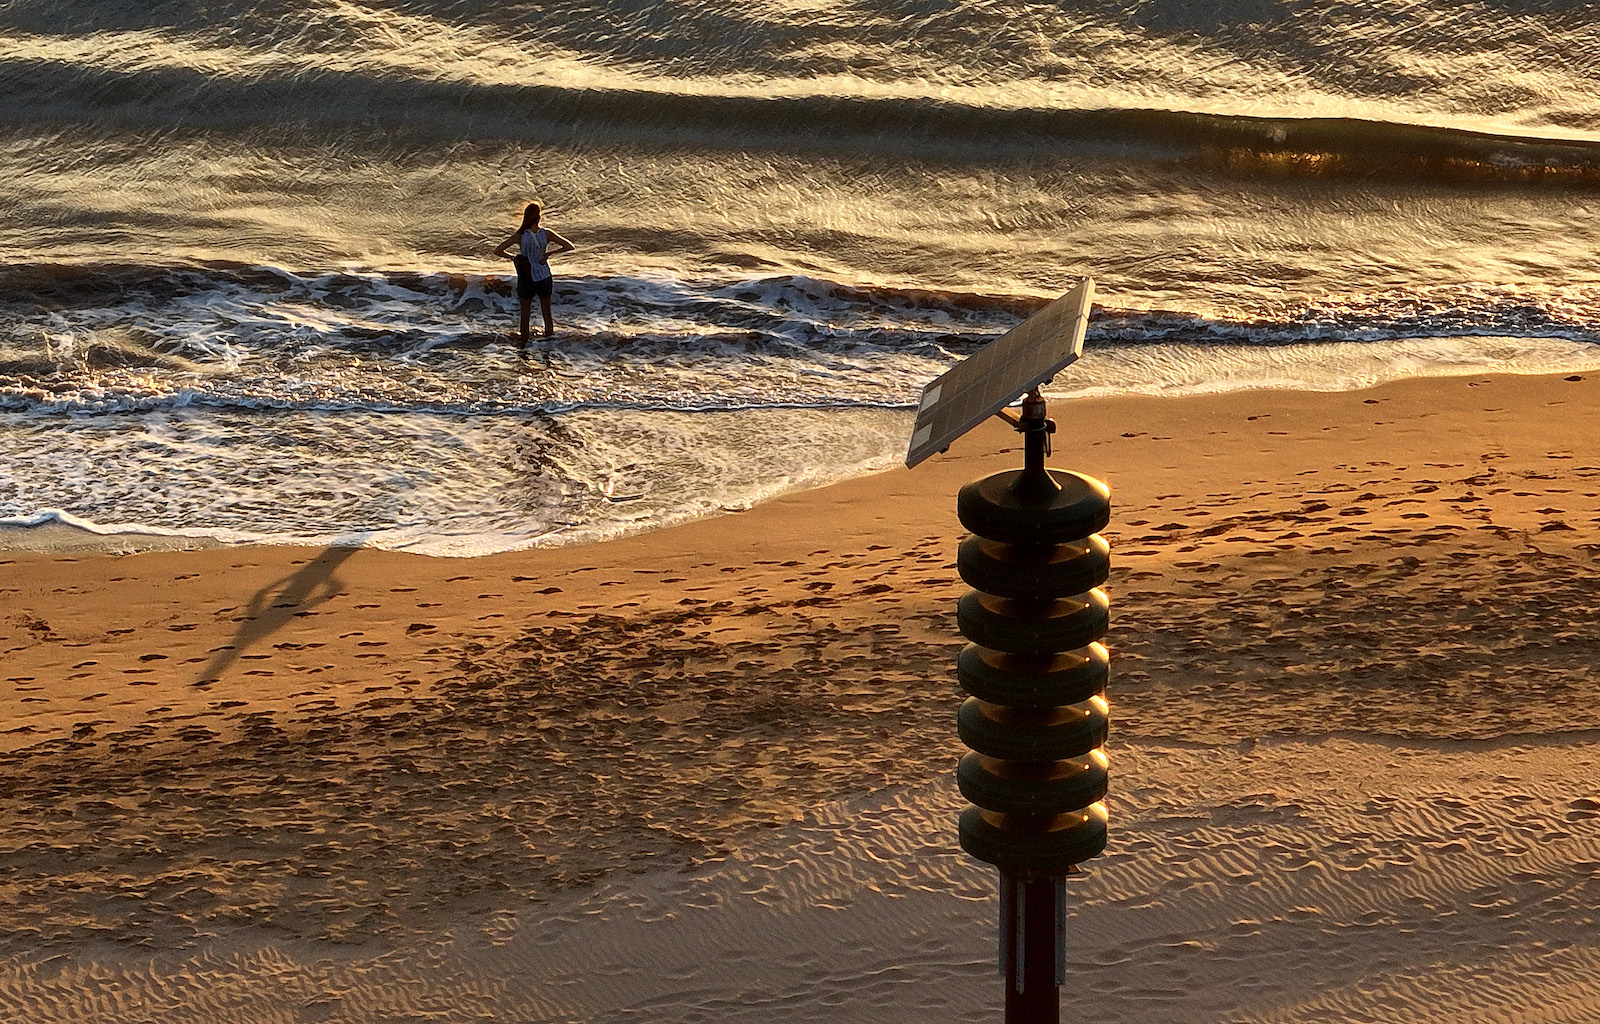 a siren on a beach near a woman in the water